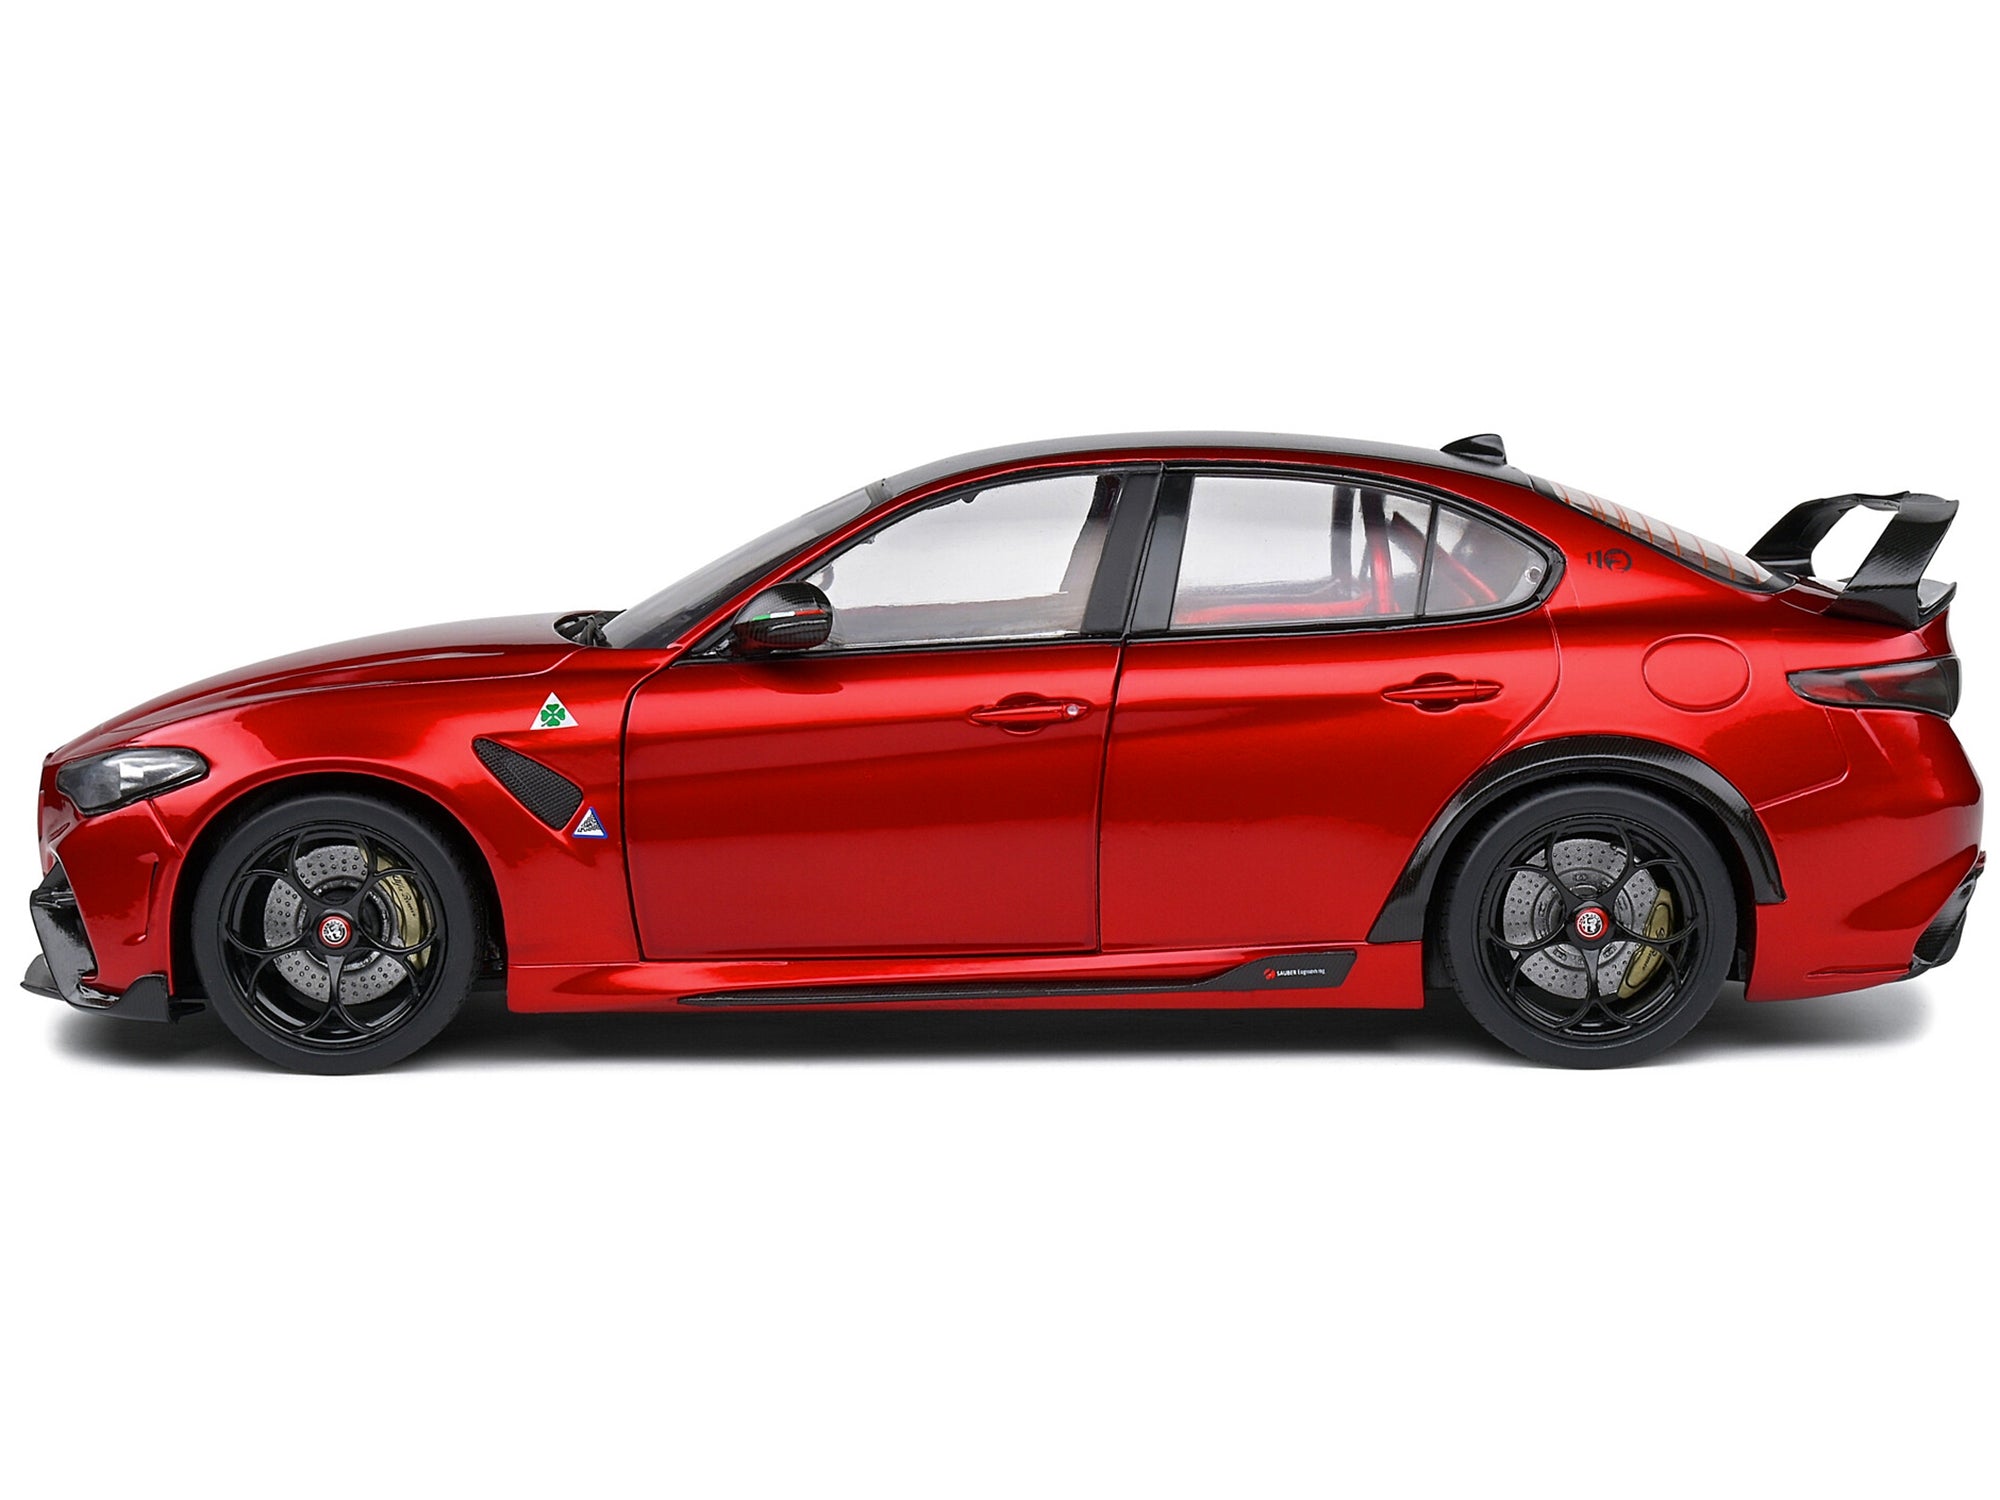 2021 Alfa Romeo Giulia GTA M Rosso Tristrato Red Metallic with Carbon Top 1/18 Diecast Model Car by Solido